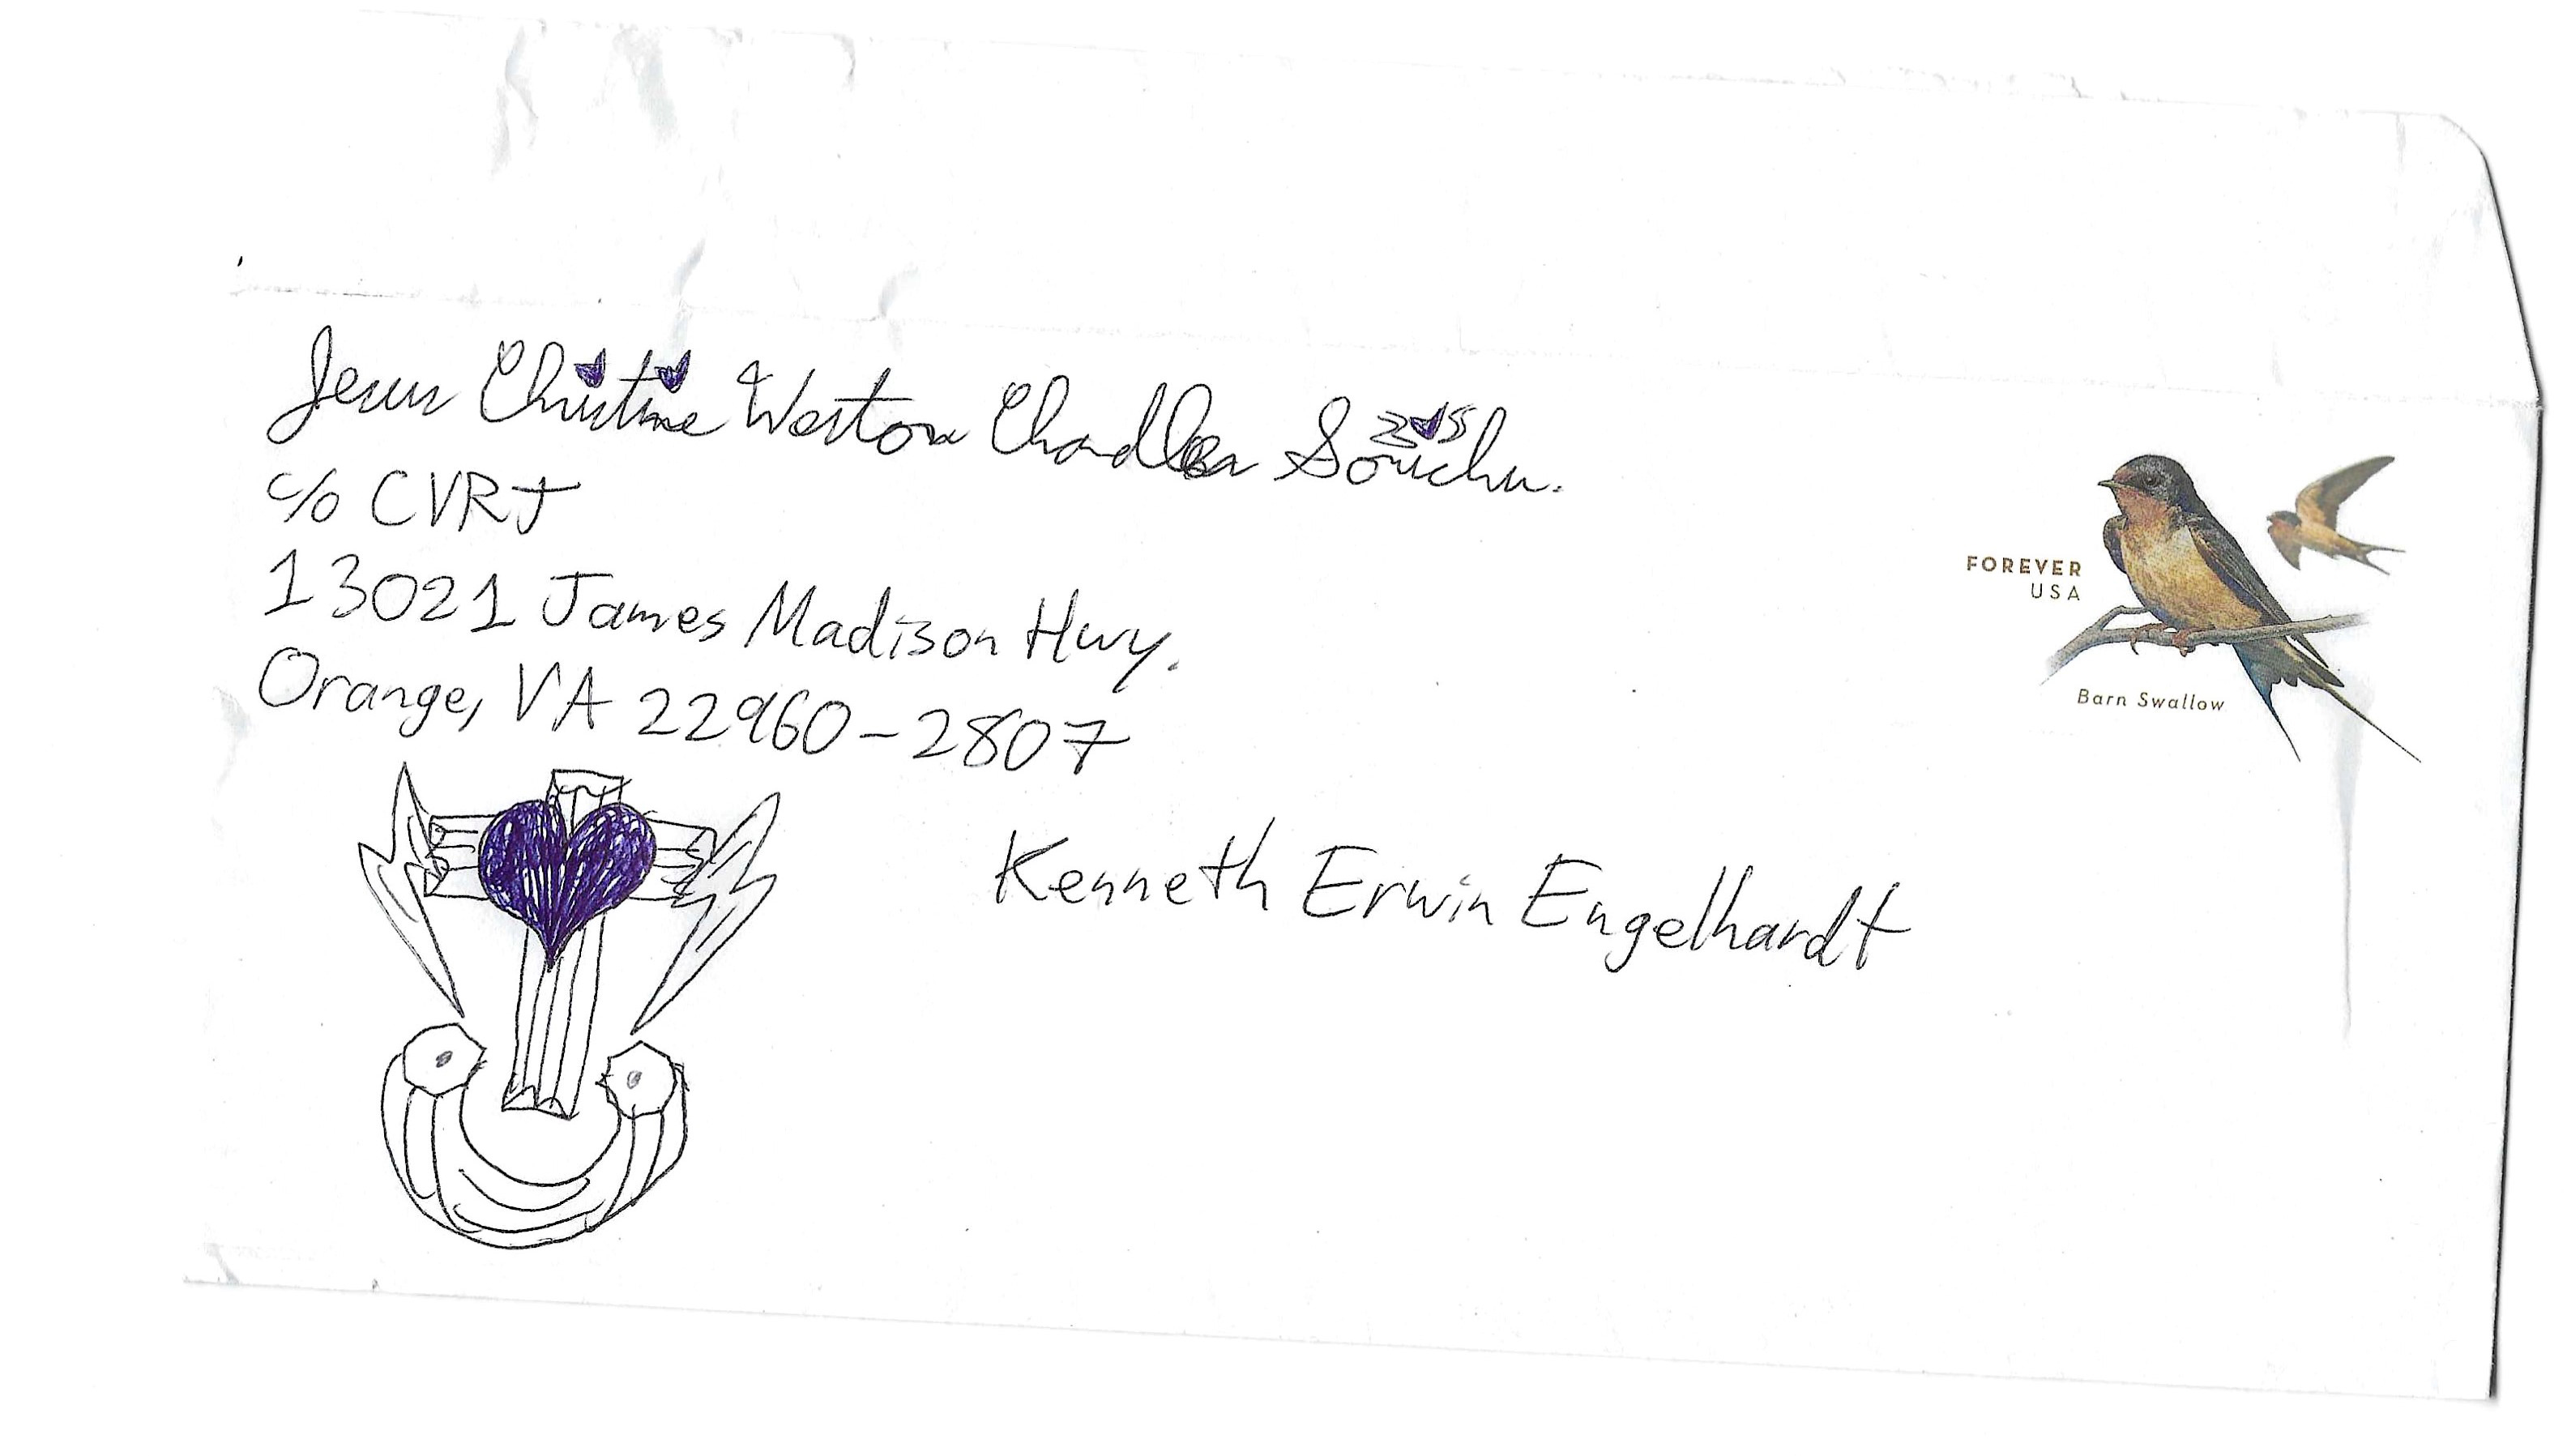 Letter Received tonight January 24, 2022 Envelope front.jpg